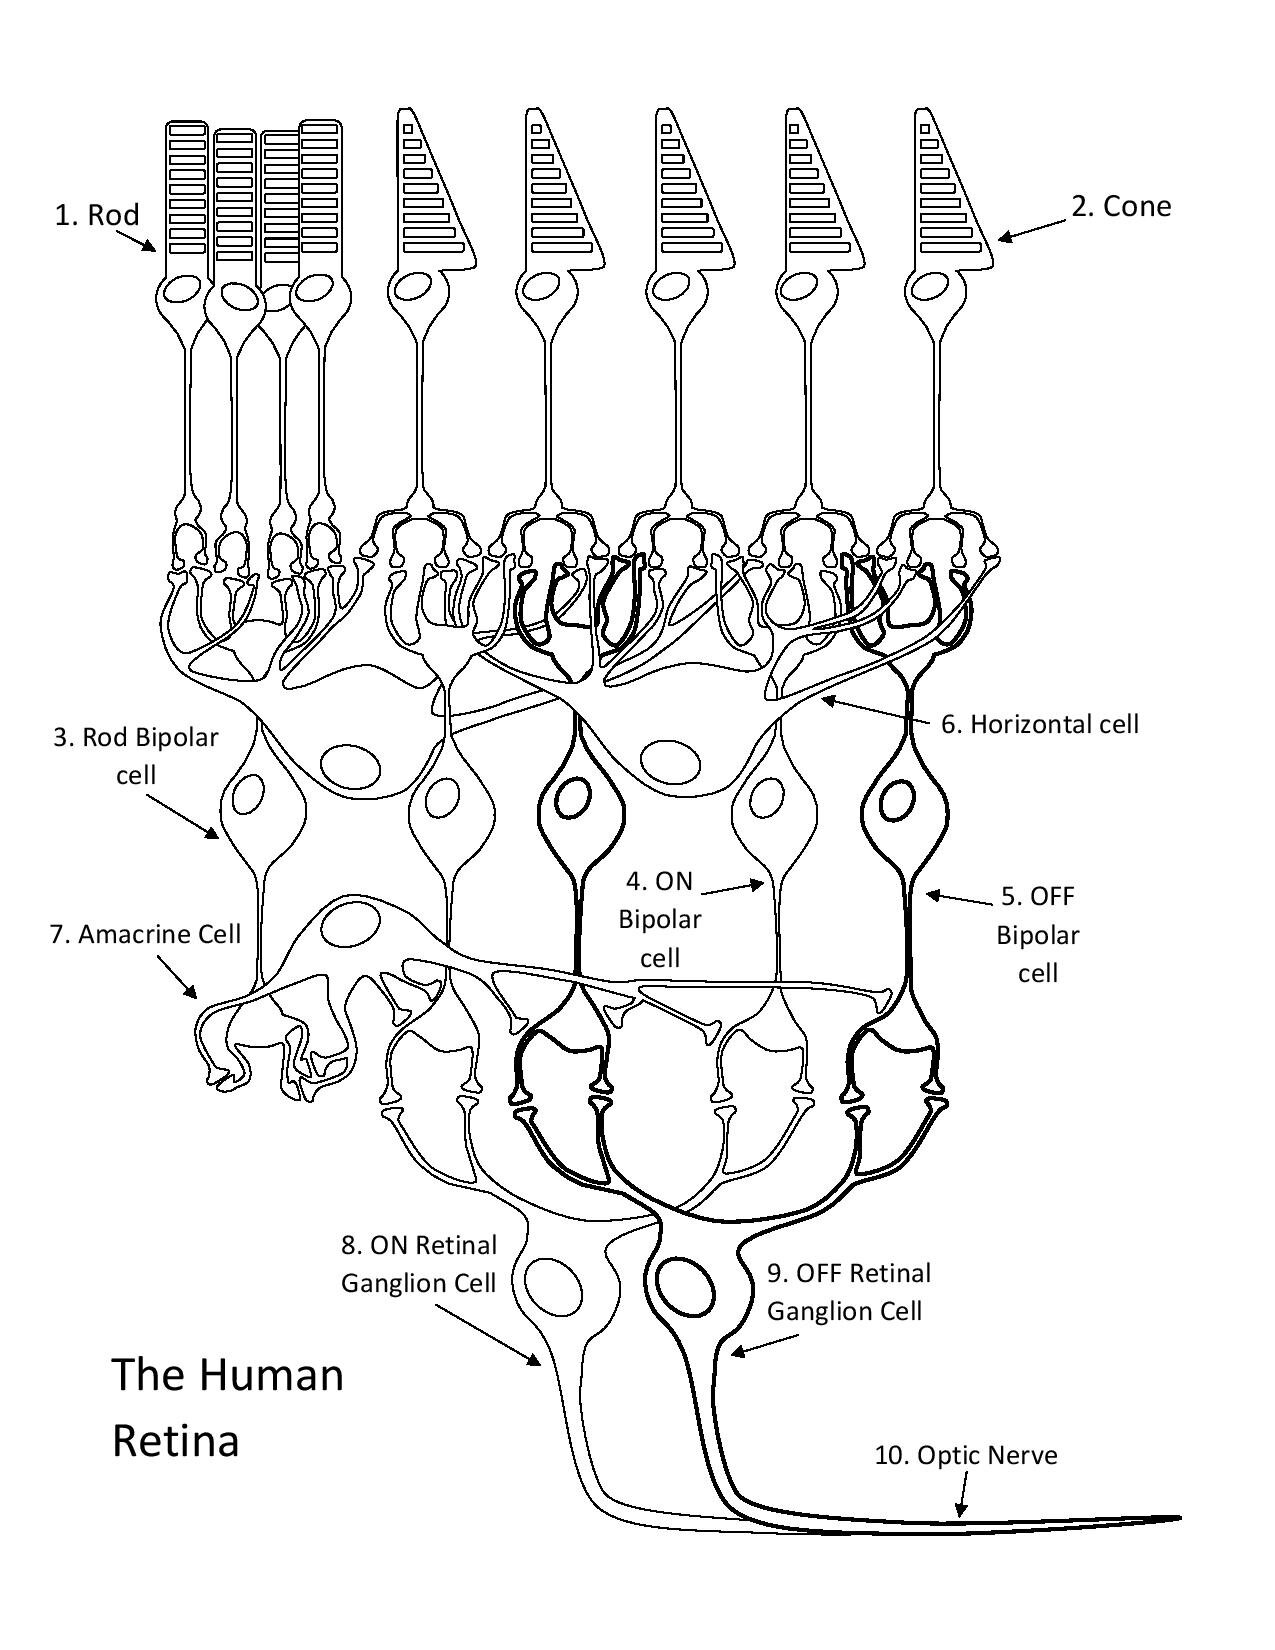 The Human Retina